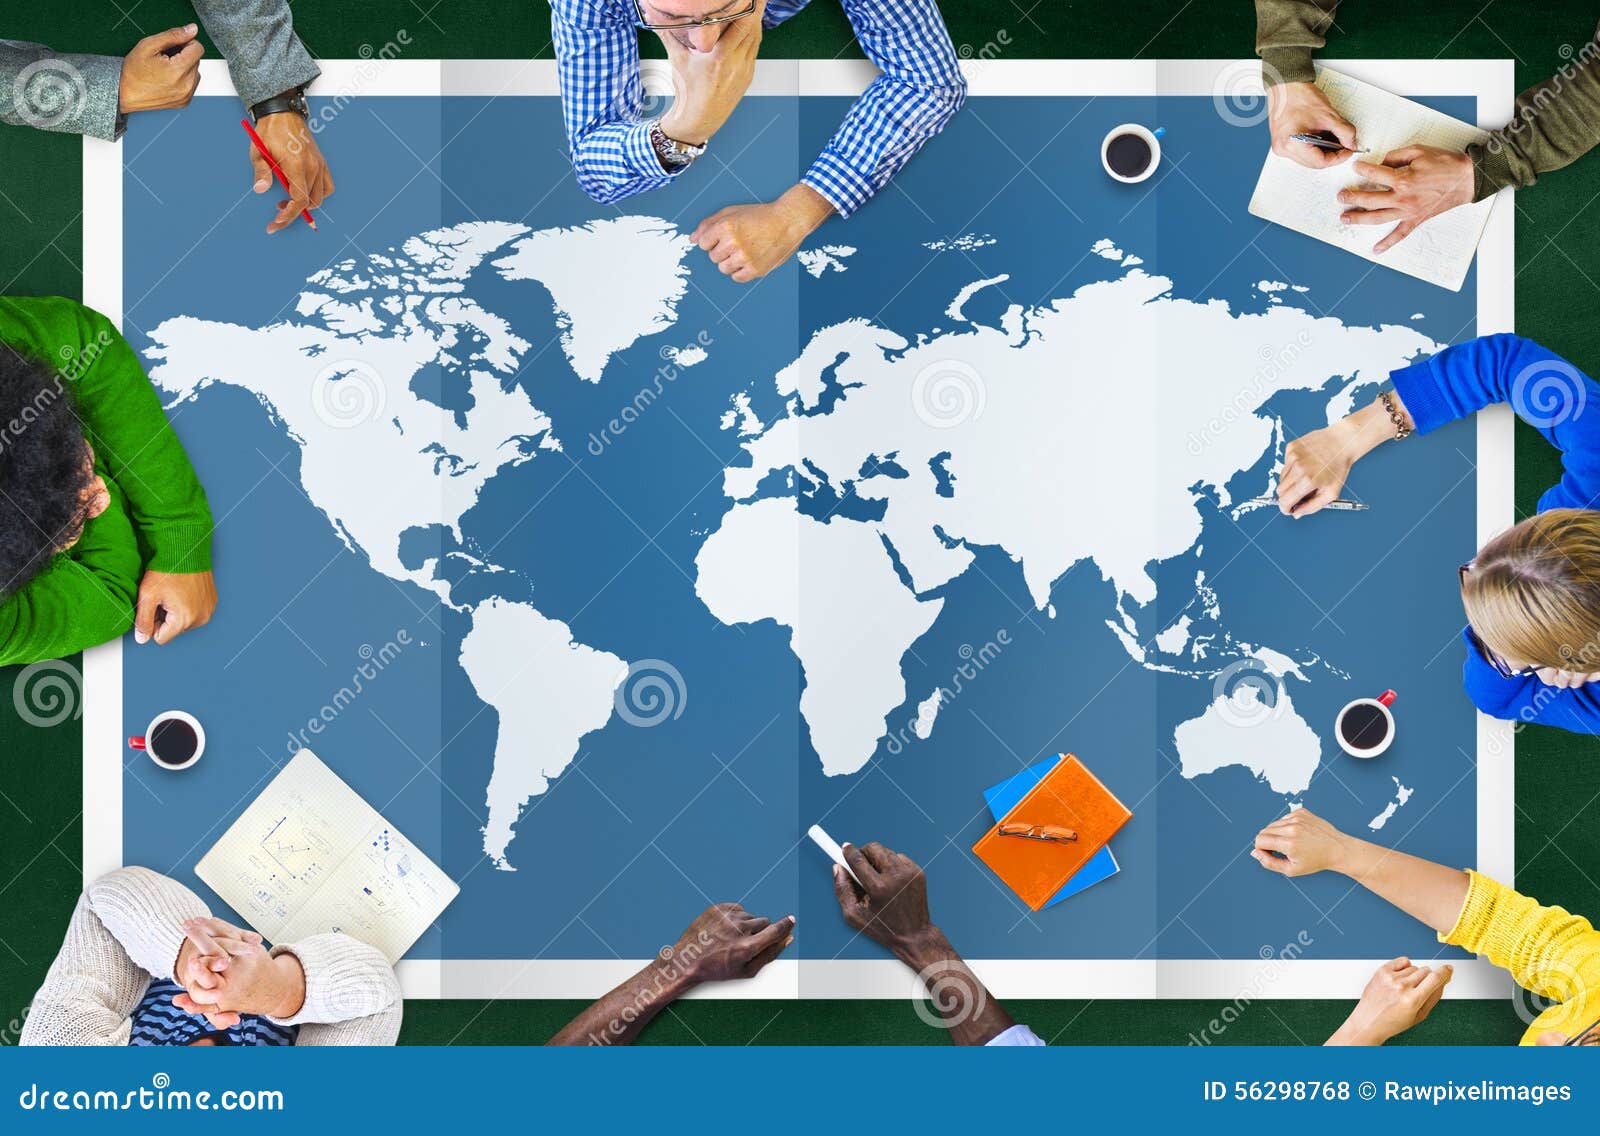 world global business cartography globalization international co